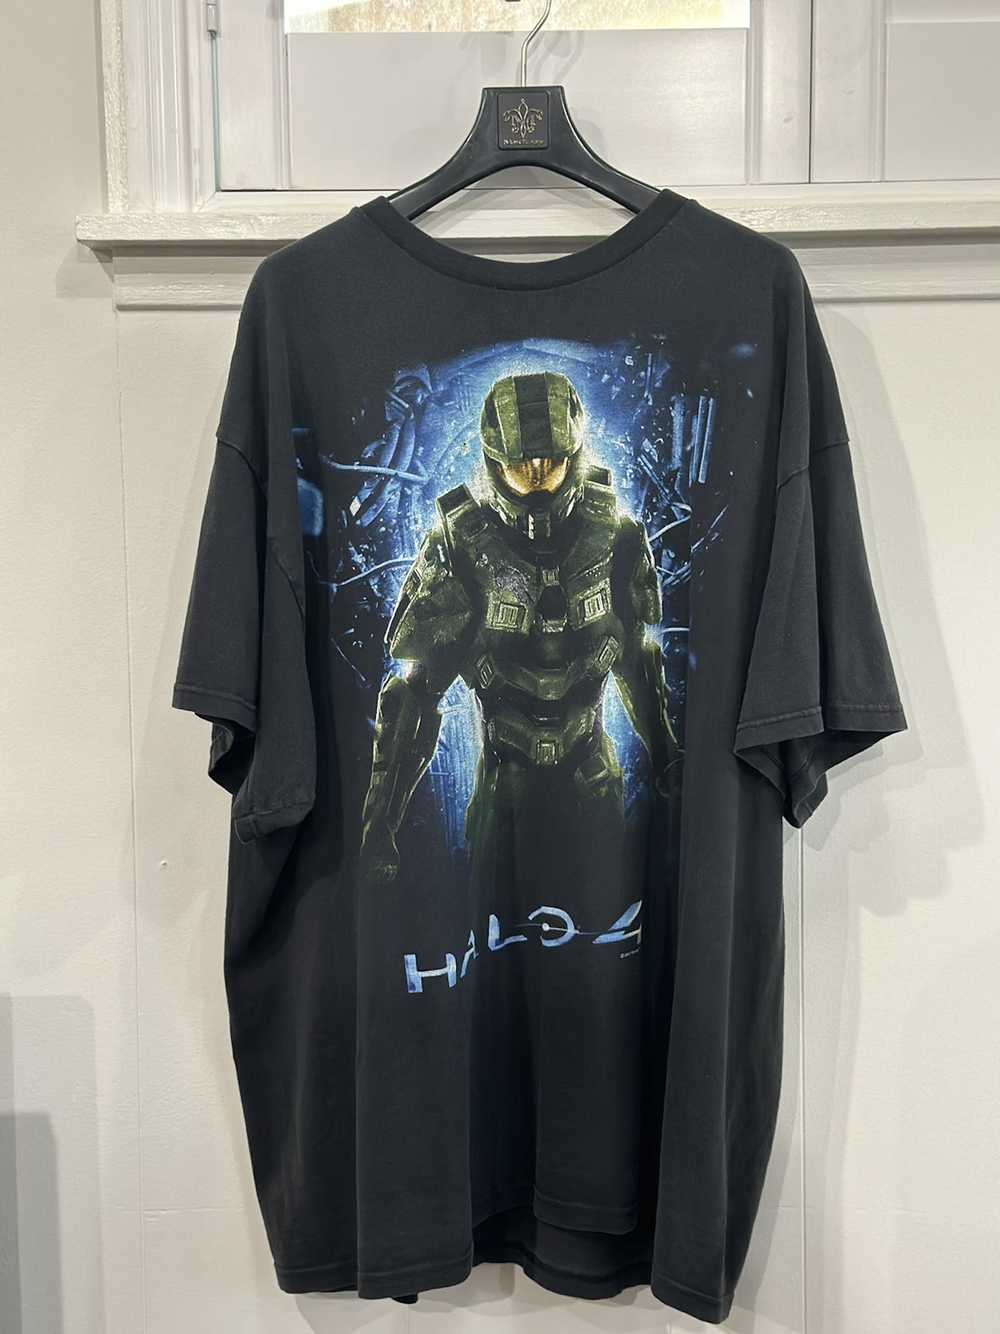 Halo × Vintage Vintage Halo 4 Promo T shirt - image 1